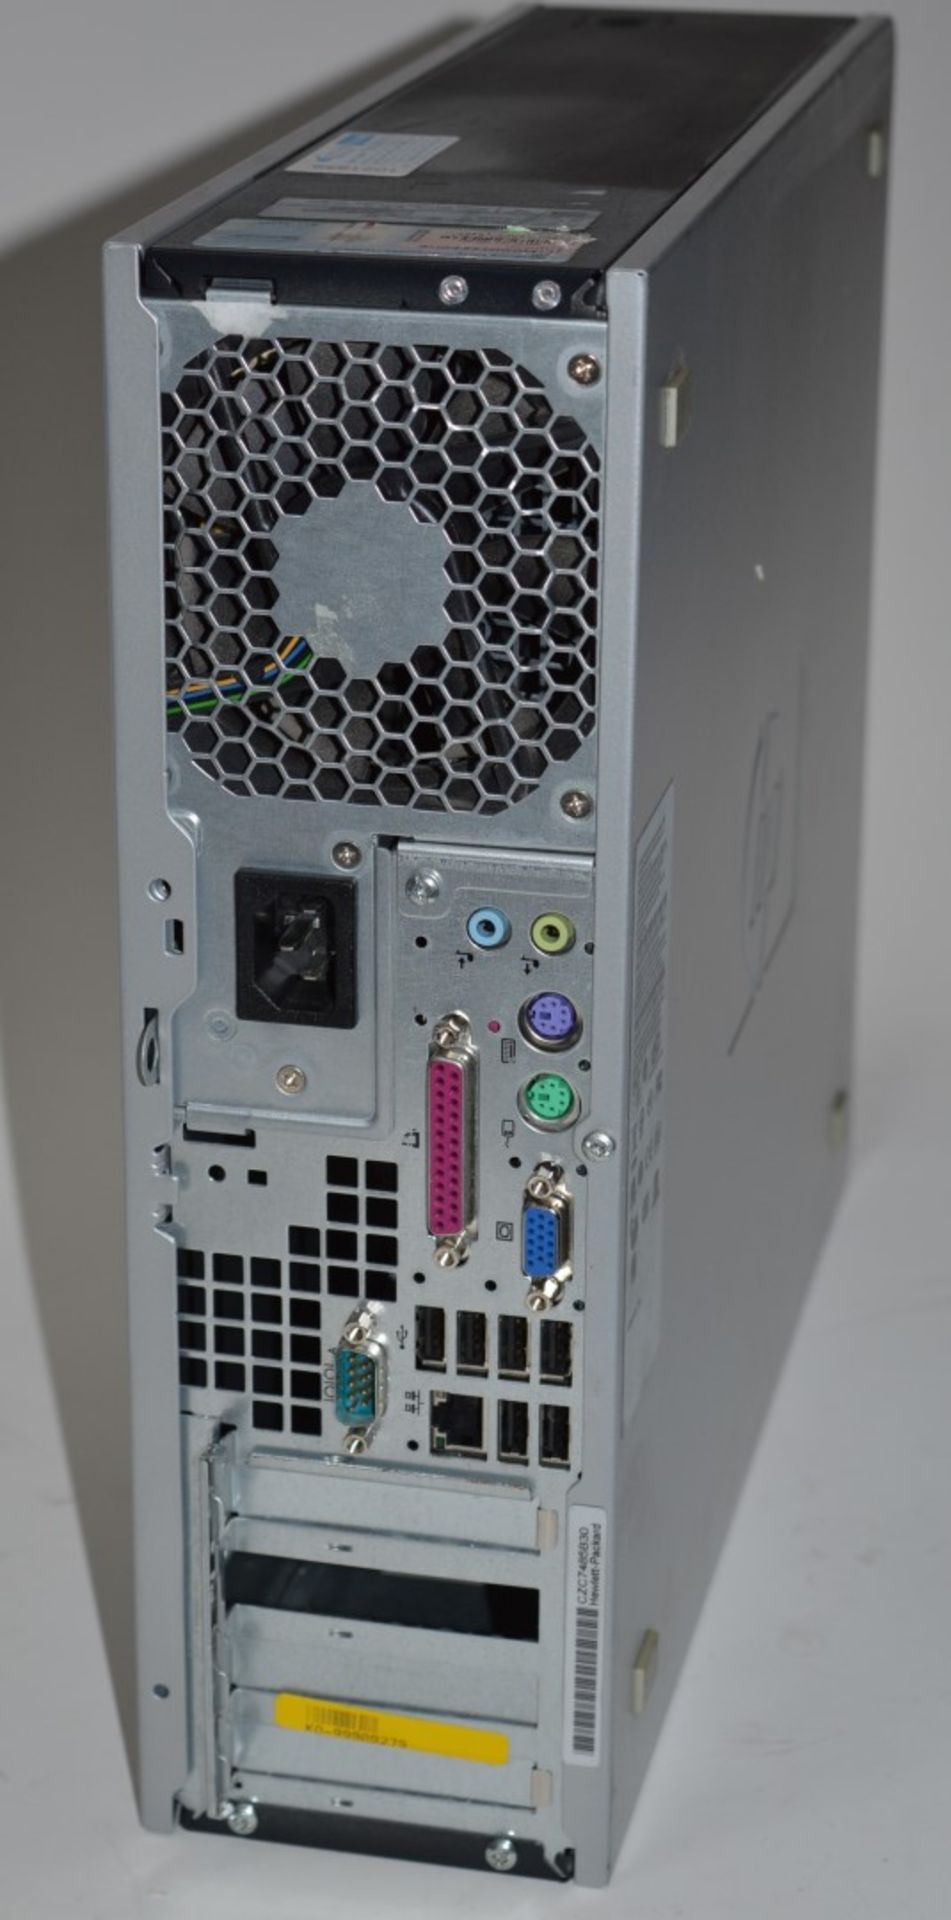 1 x Hewlett Packard DC7800 Desktop Computer - Features an Intel Core2 2.66ghz Processor, DVD Rom and - Image 2 of 2